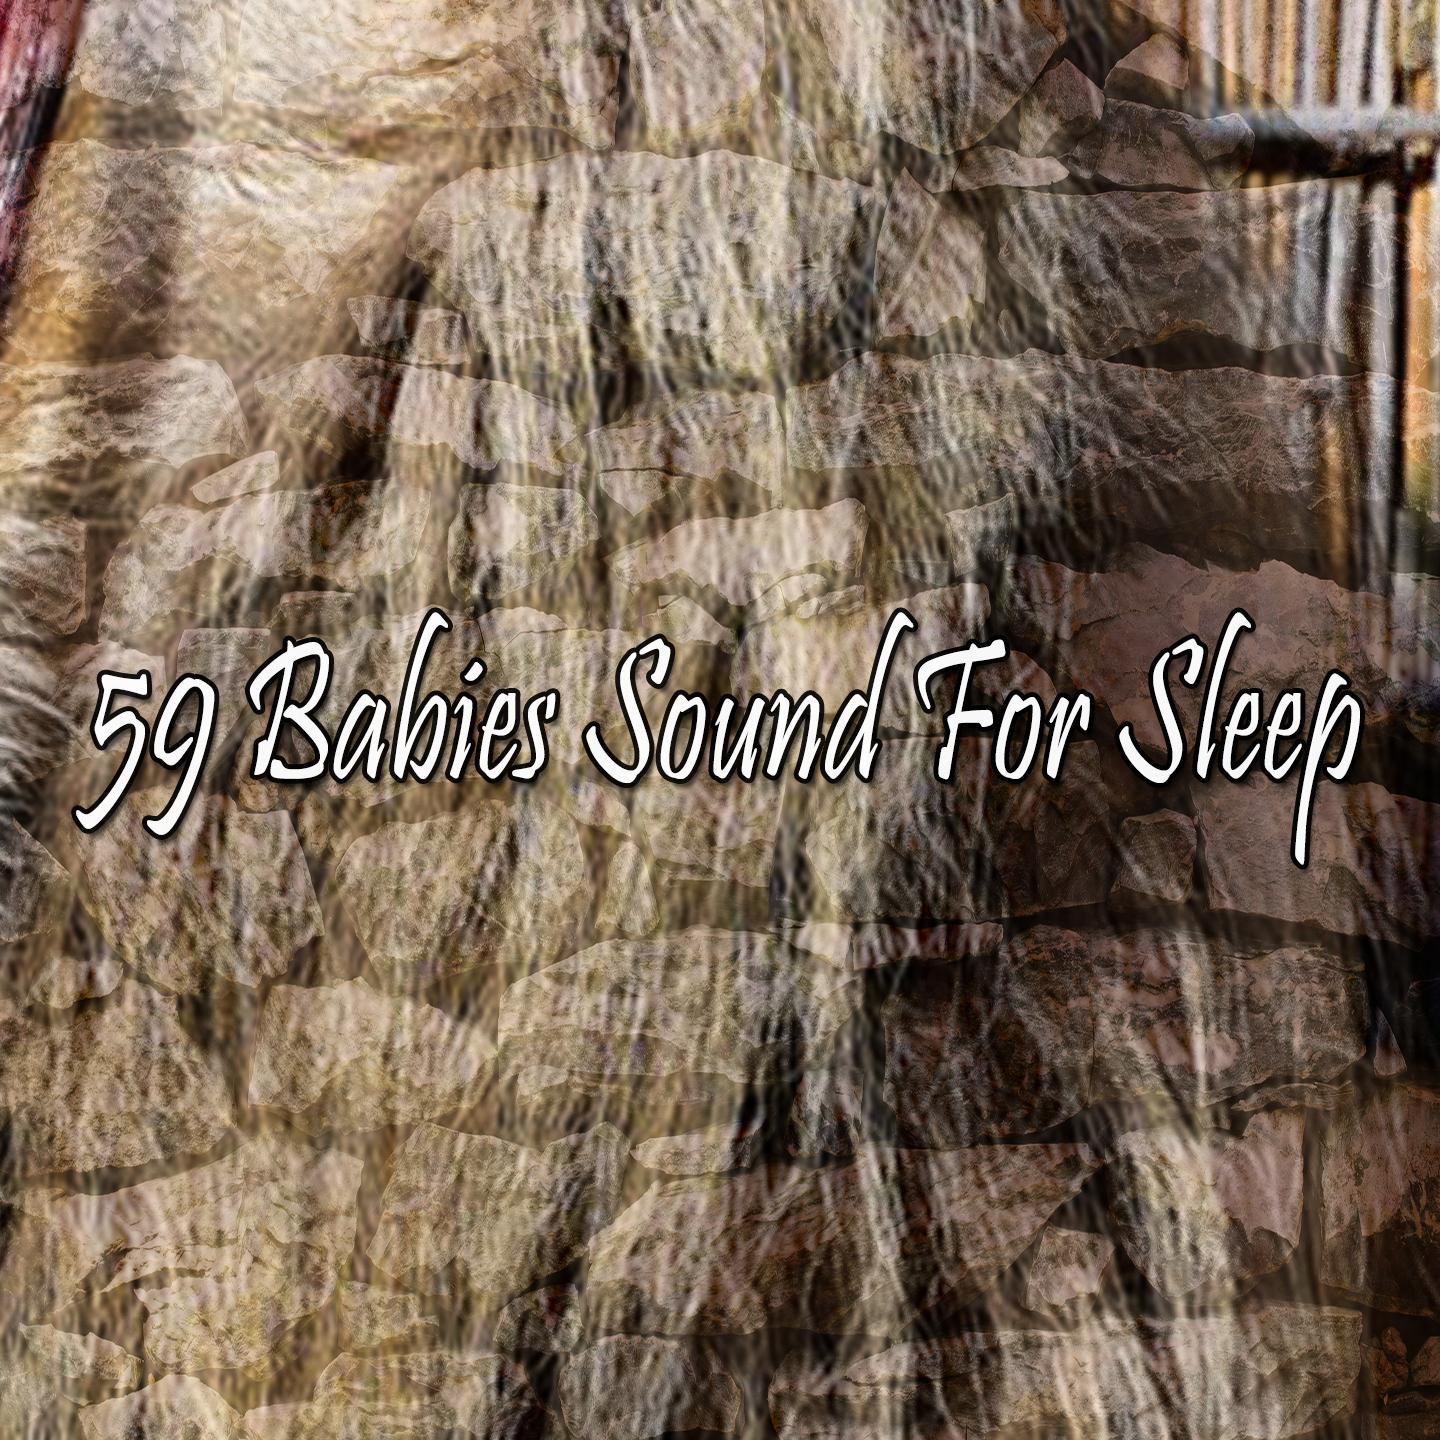 59 Babies Sound For Sleep